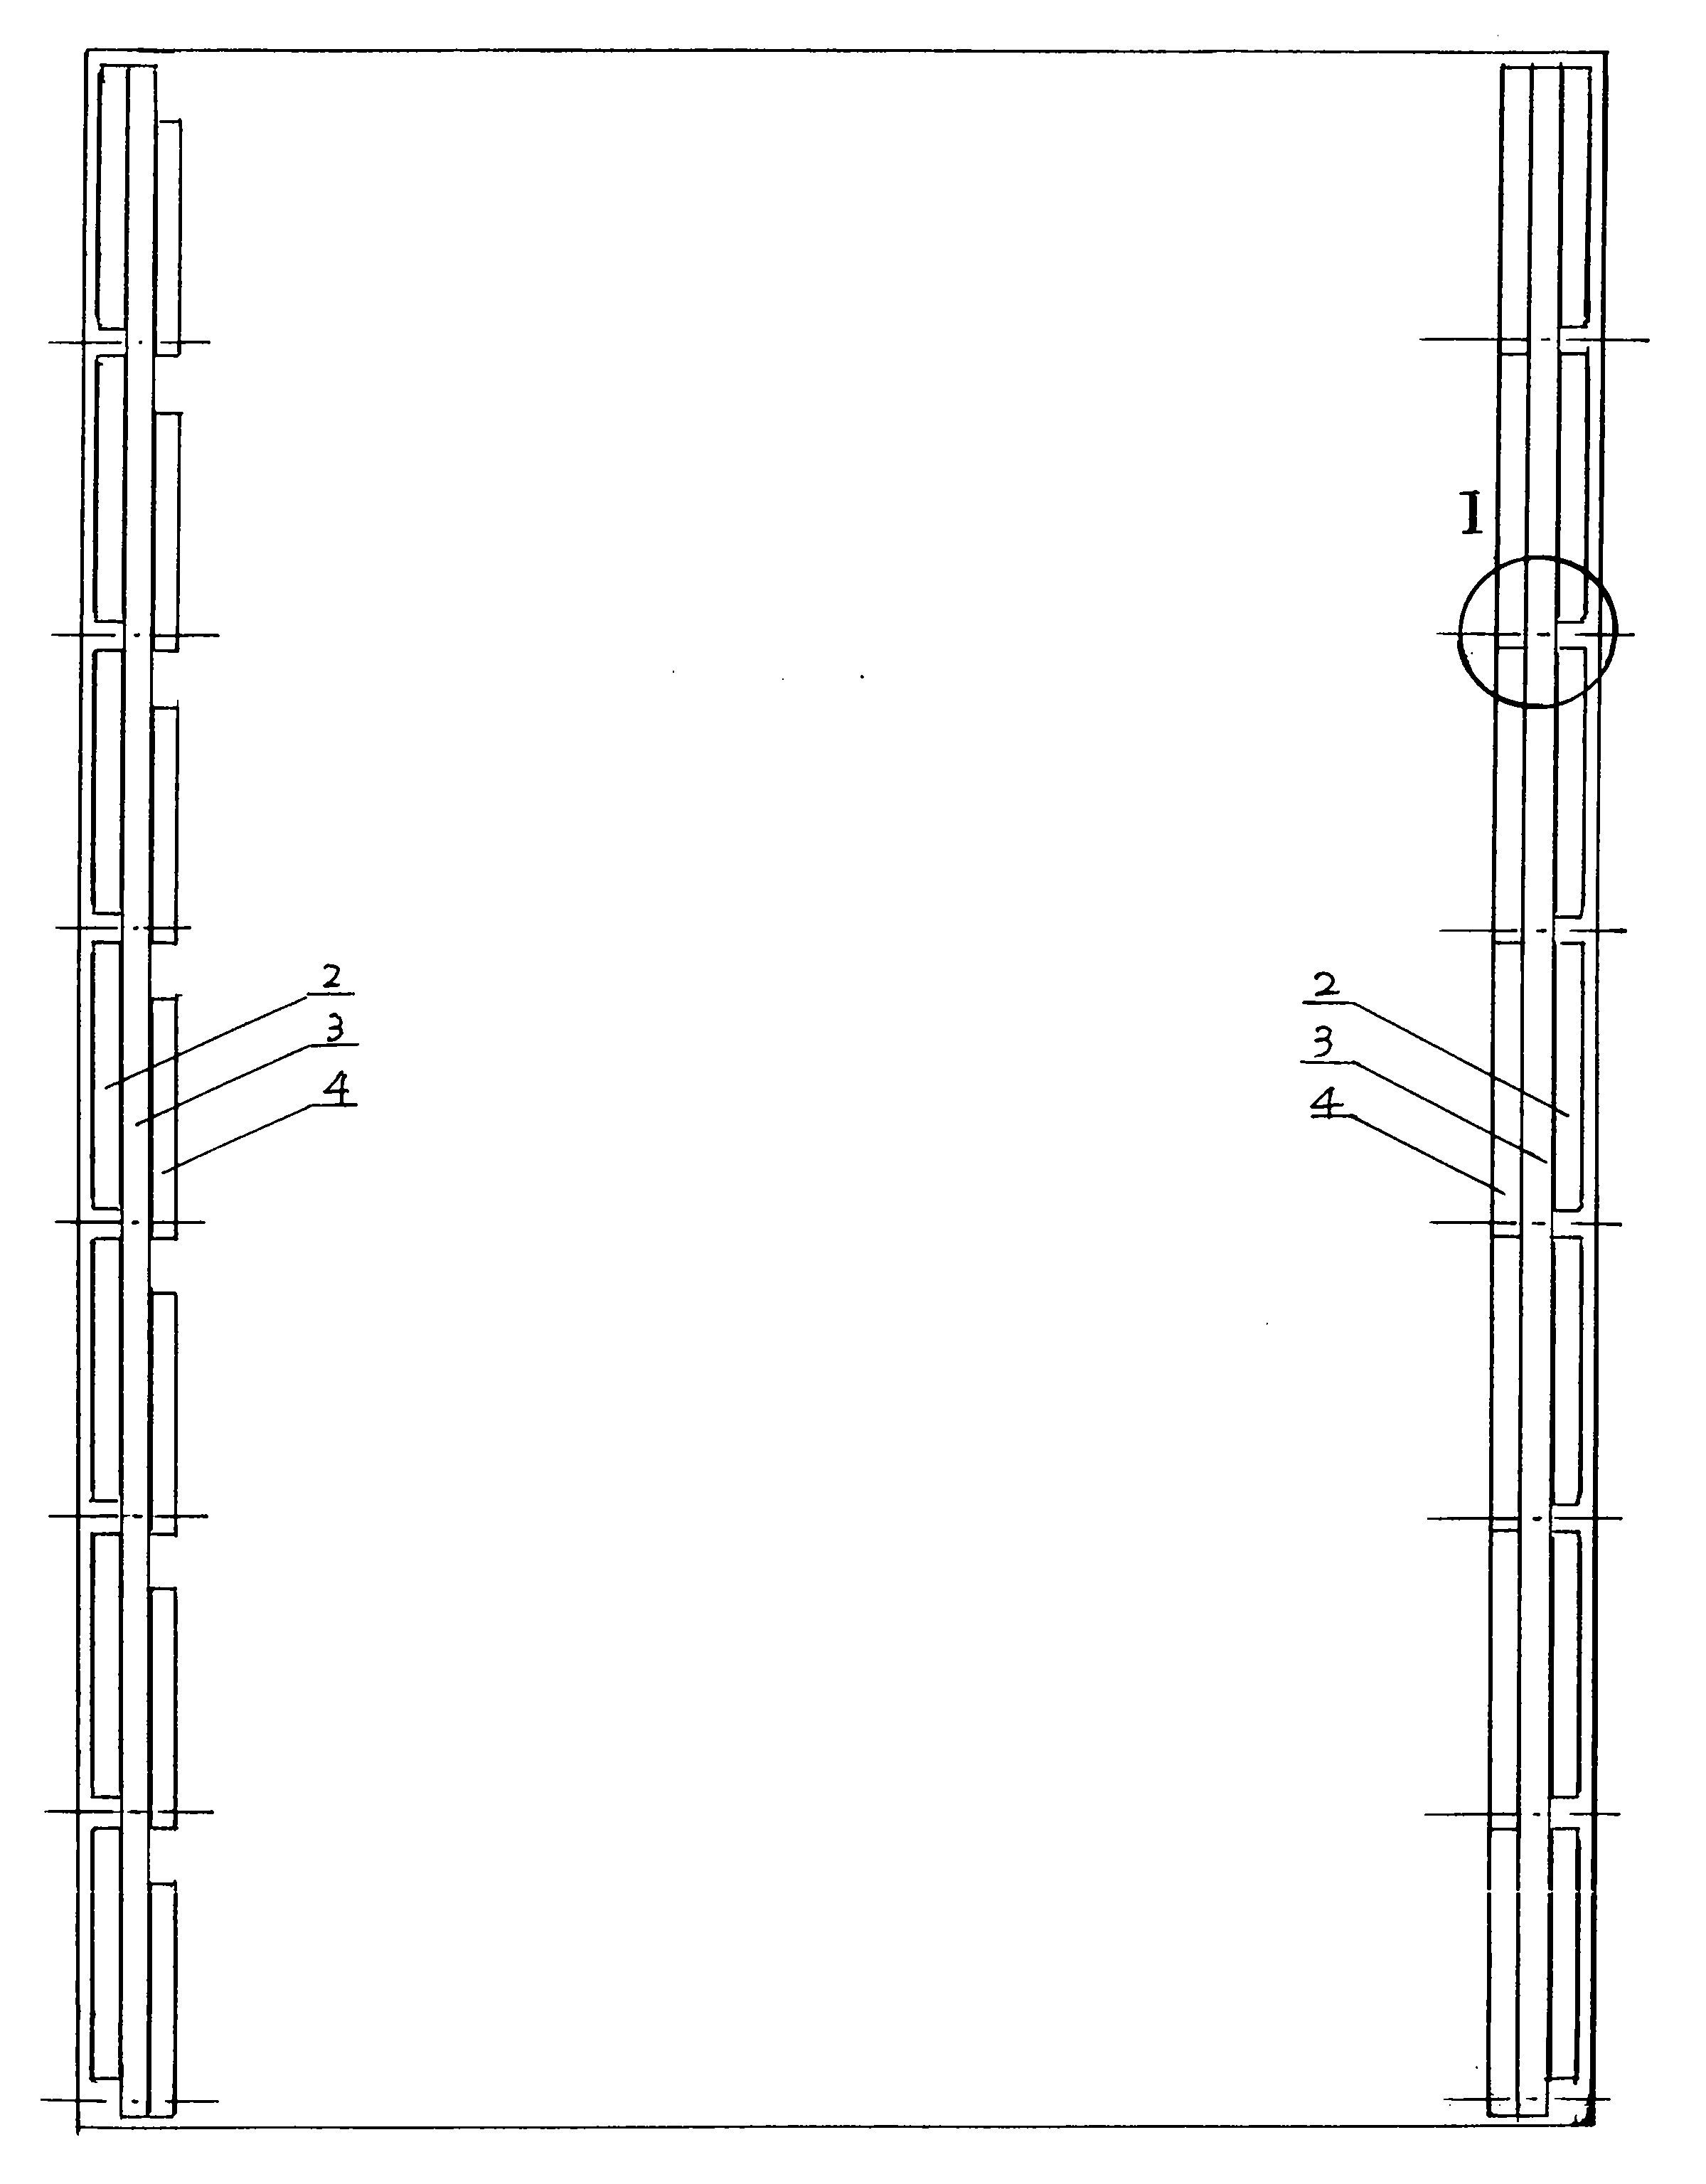 Swing type multi-rod blocking edge for blanking pad plate